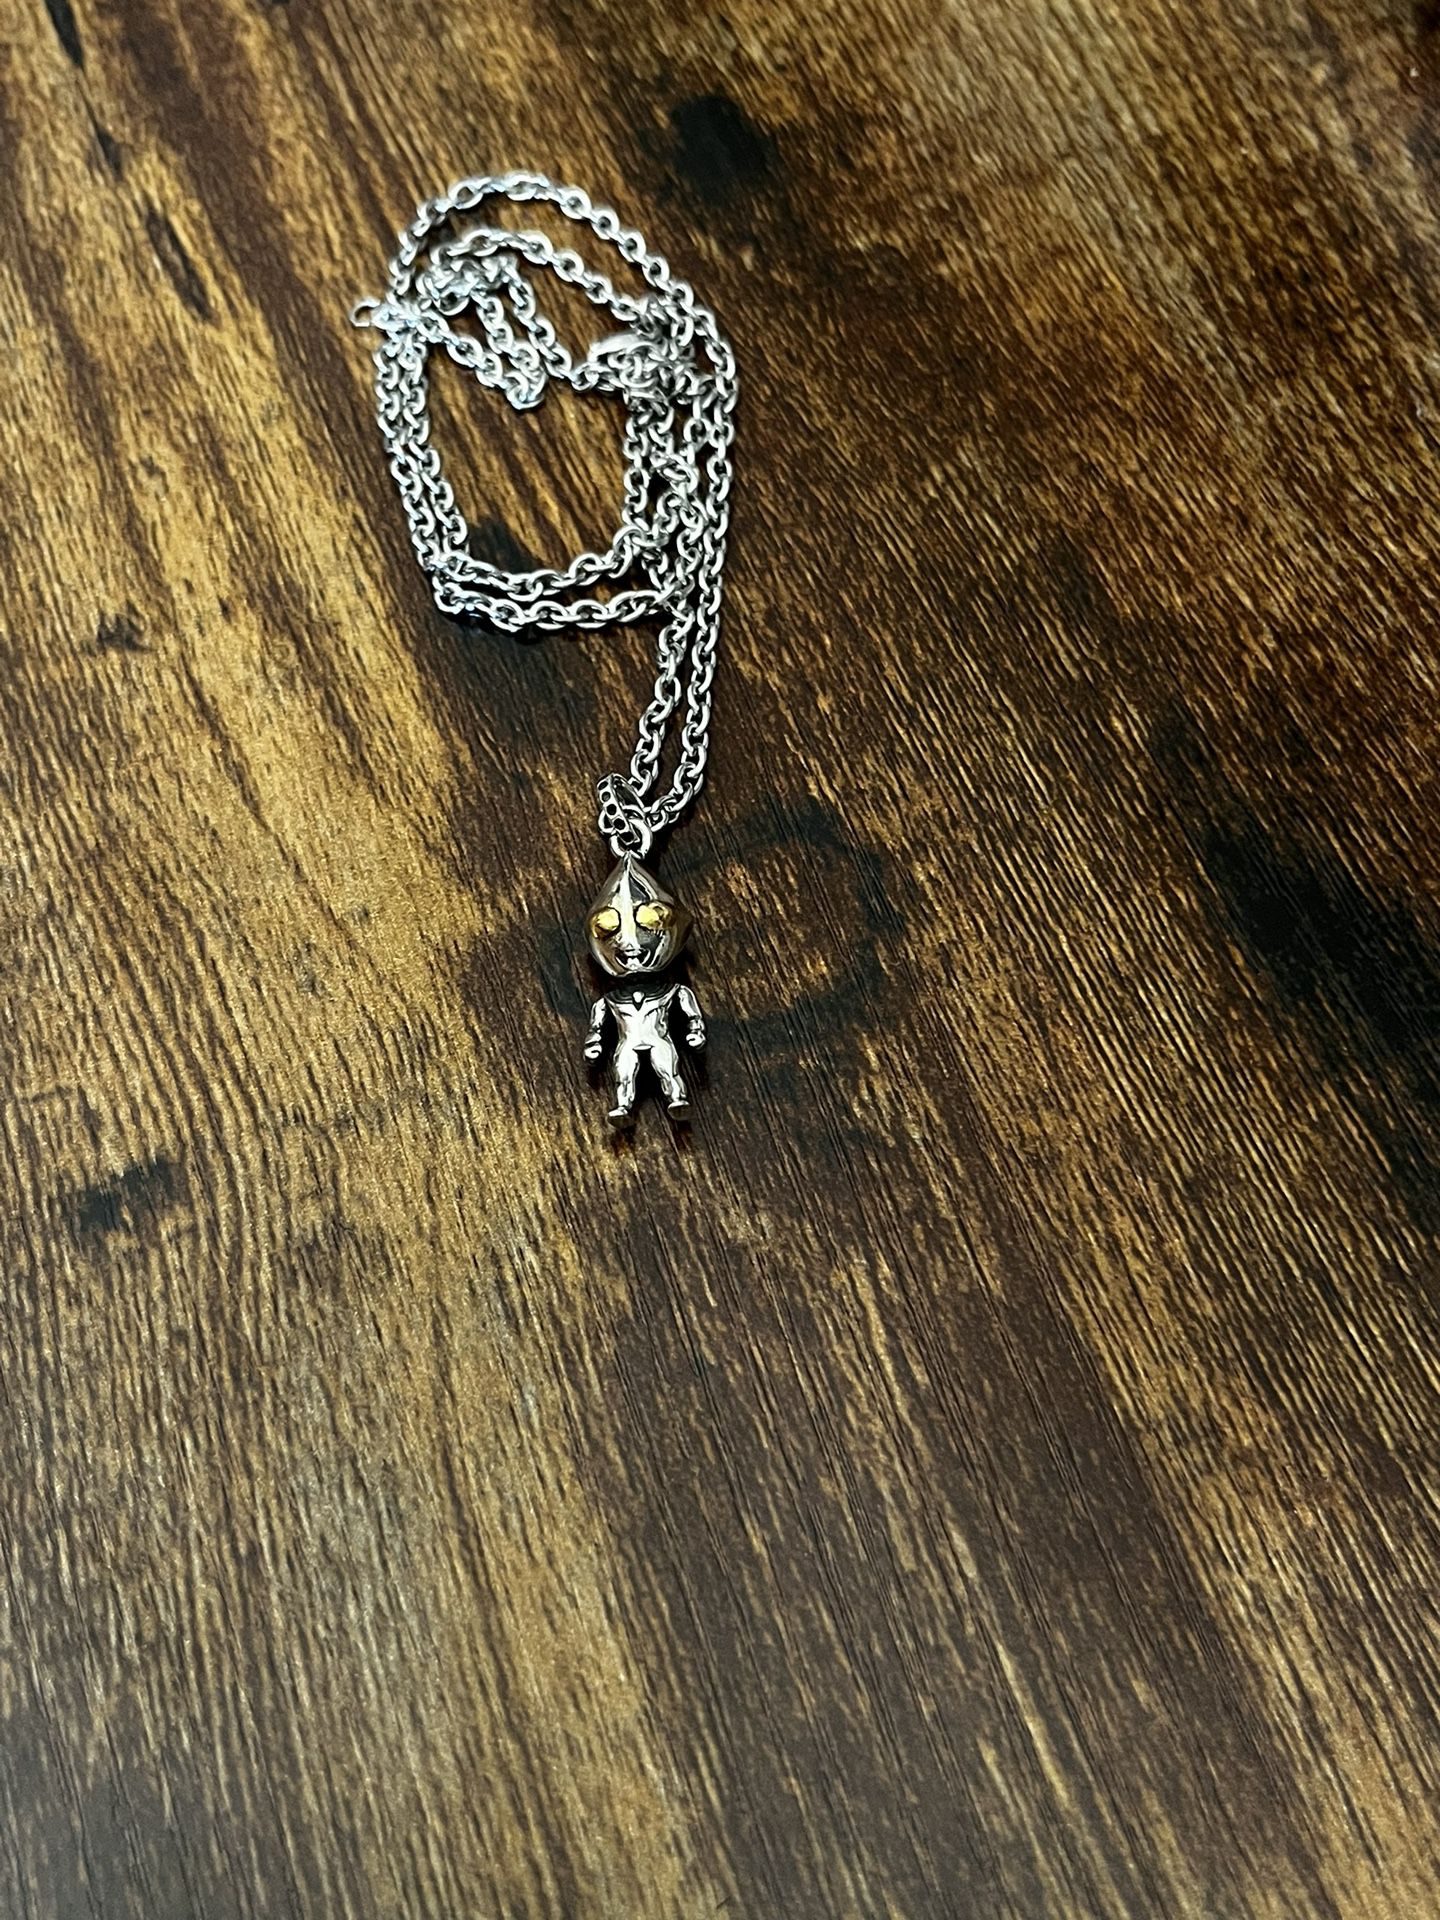 Power Ranger necklace pendant